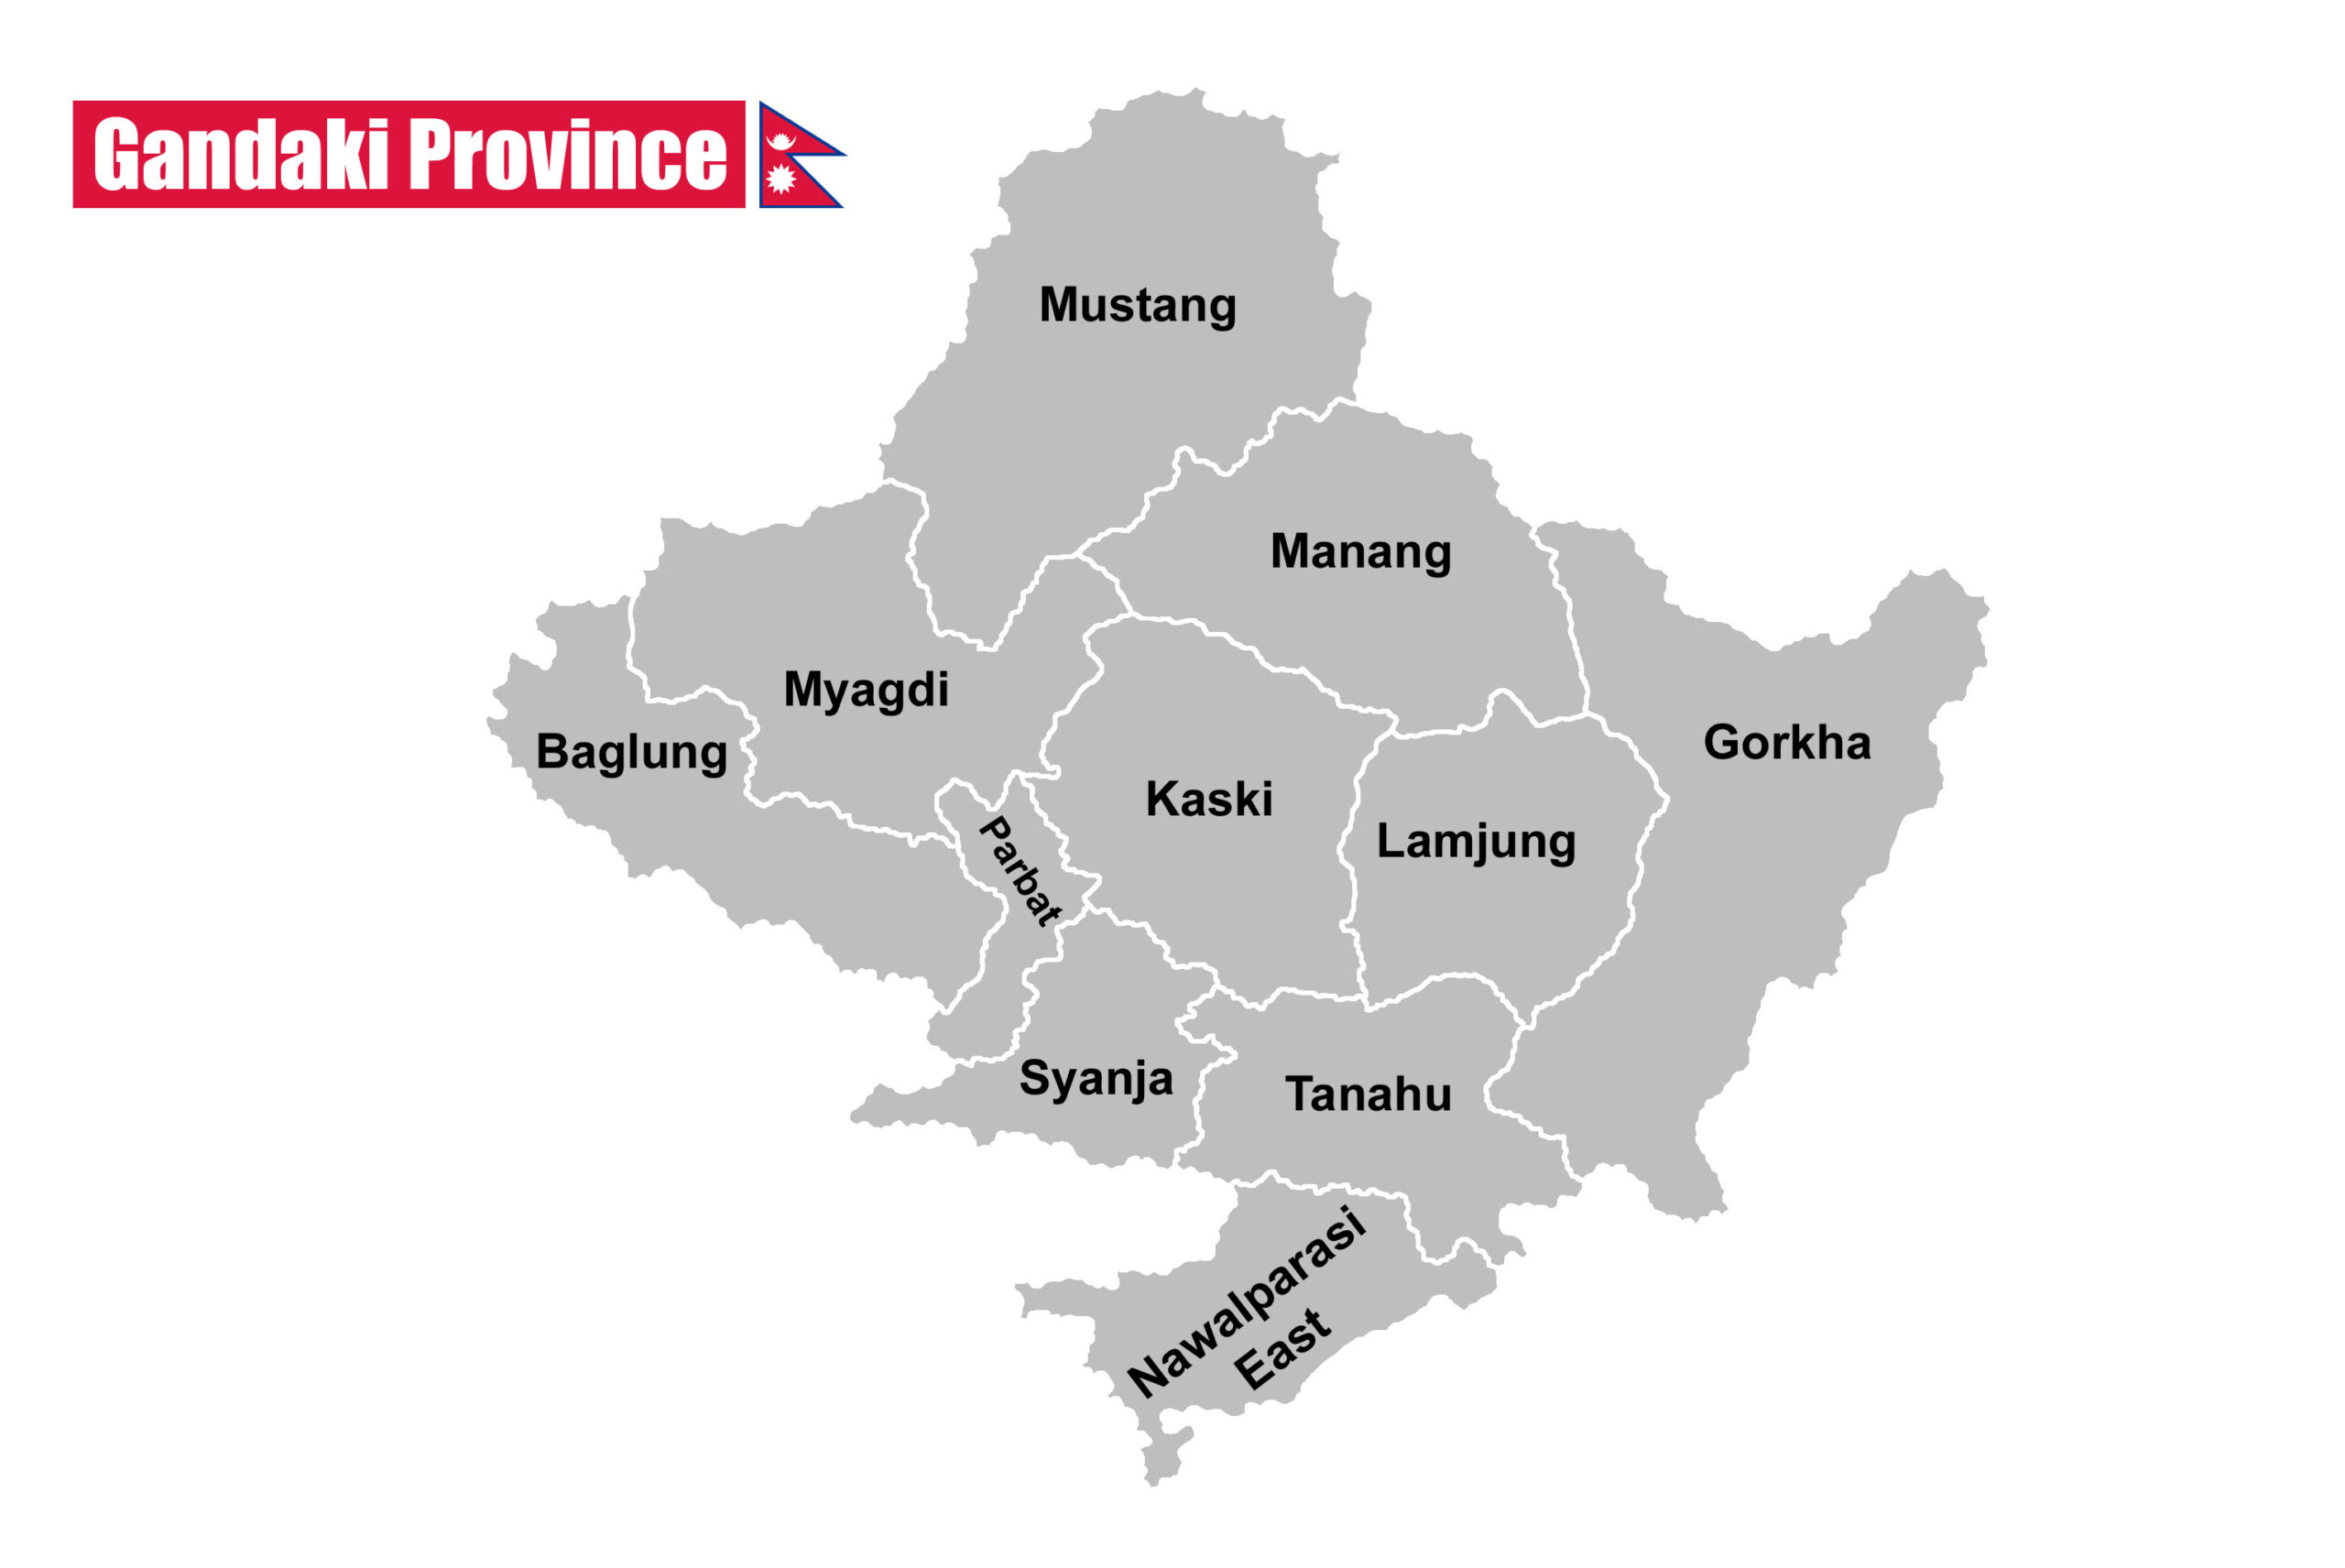 Map of Gandaki Pradesh with district names